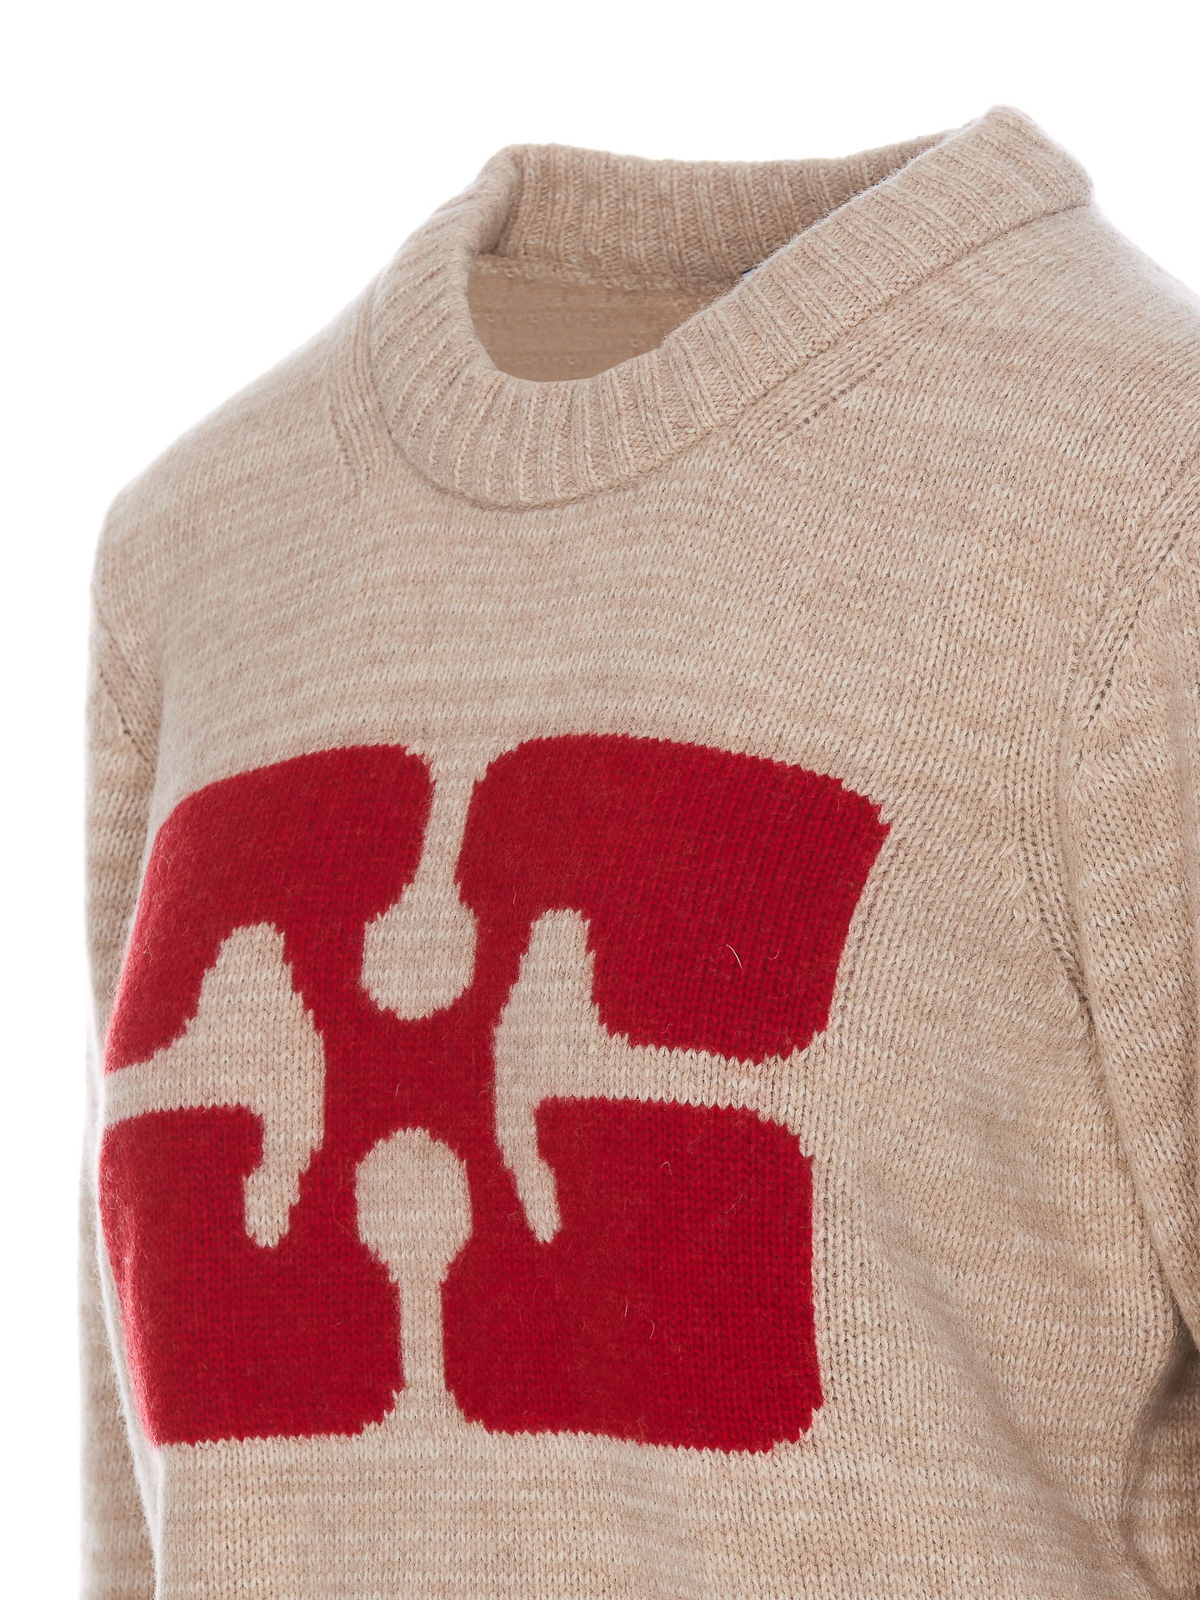 Shop Ganni Crewneck Sweater In Beige